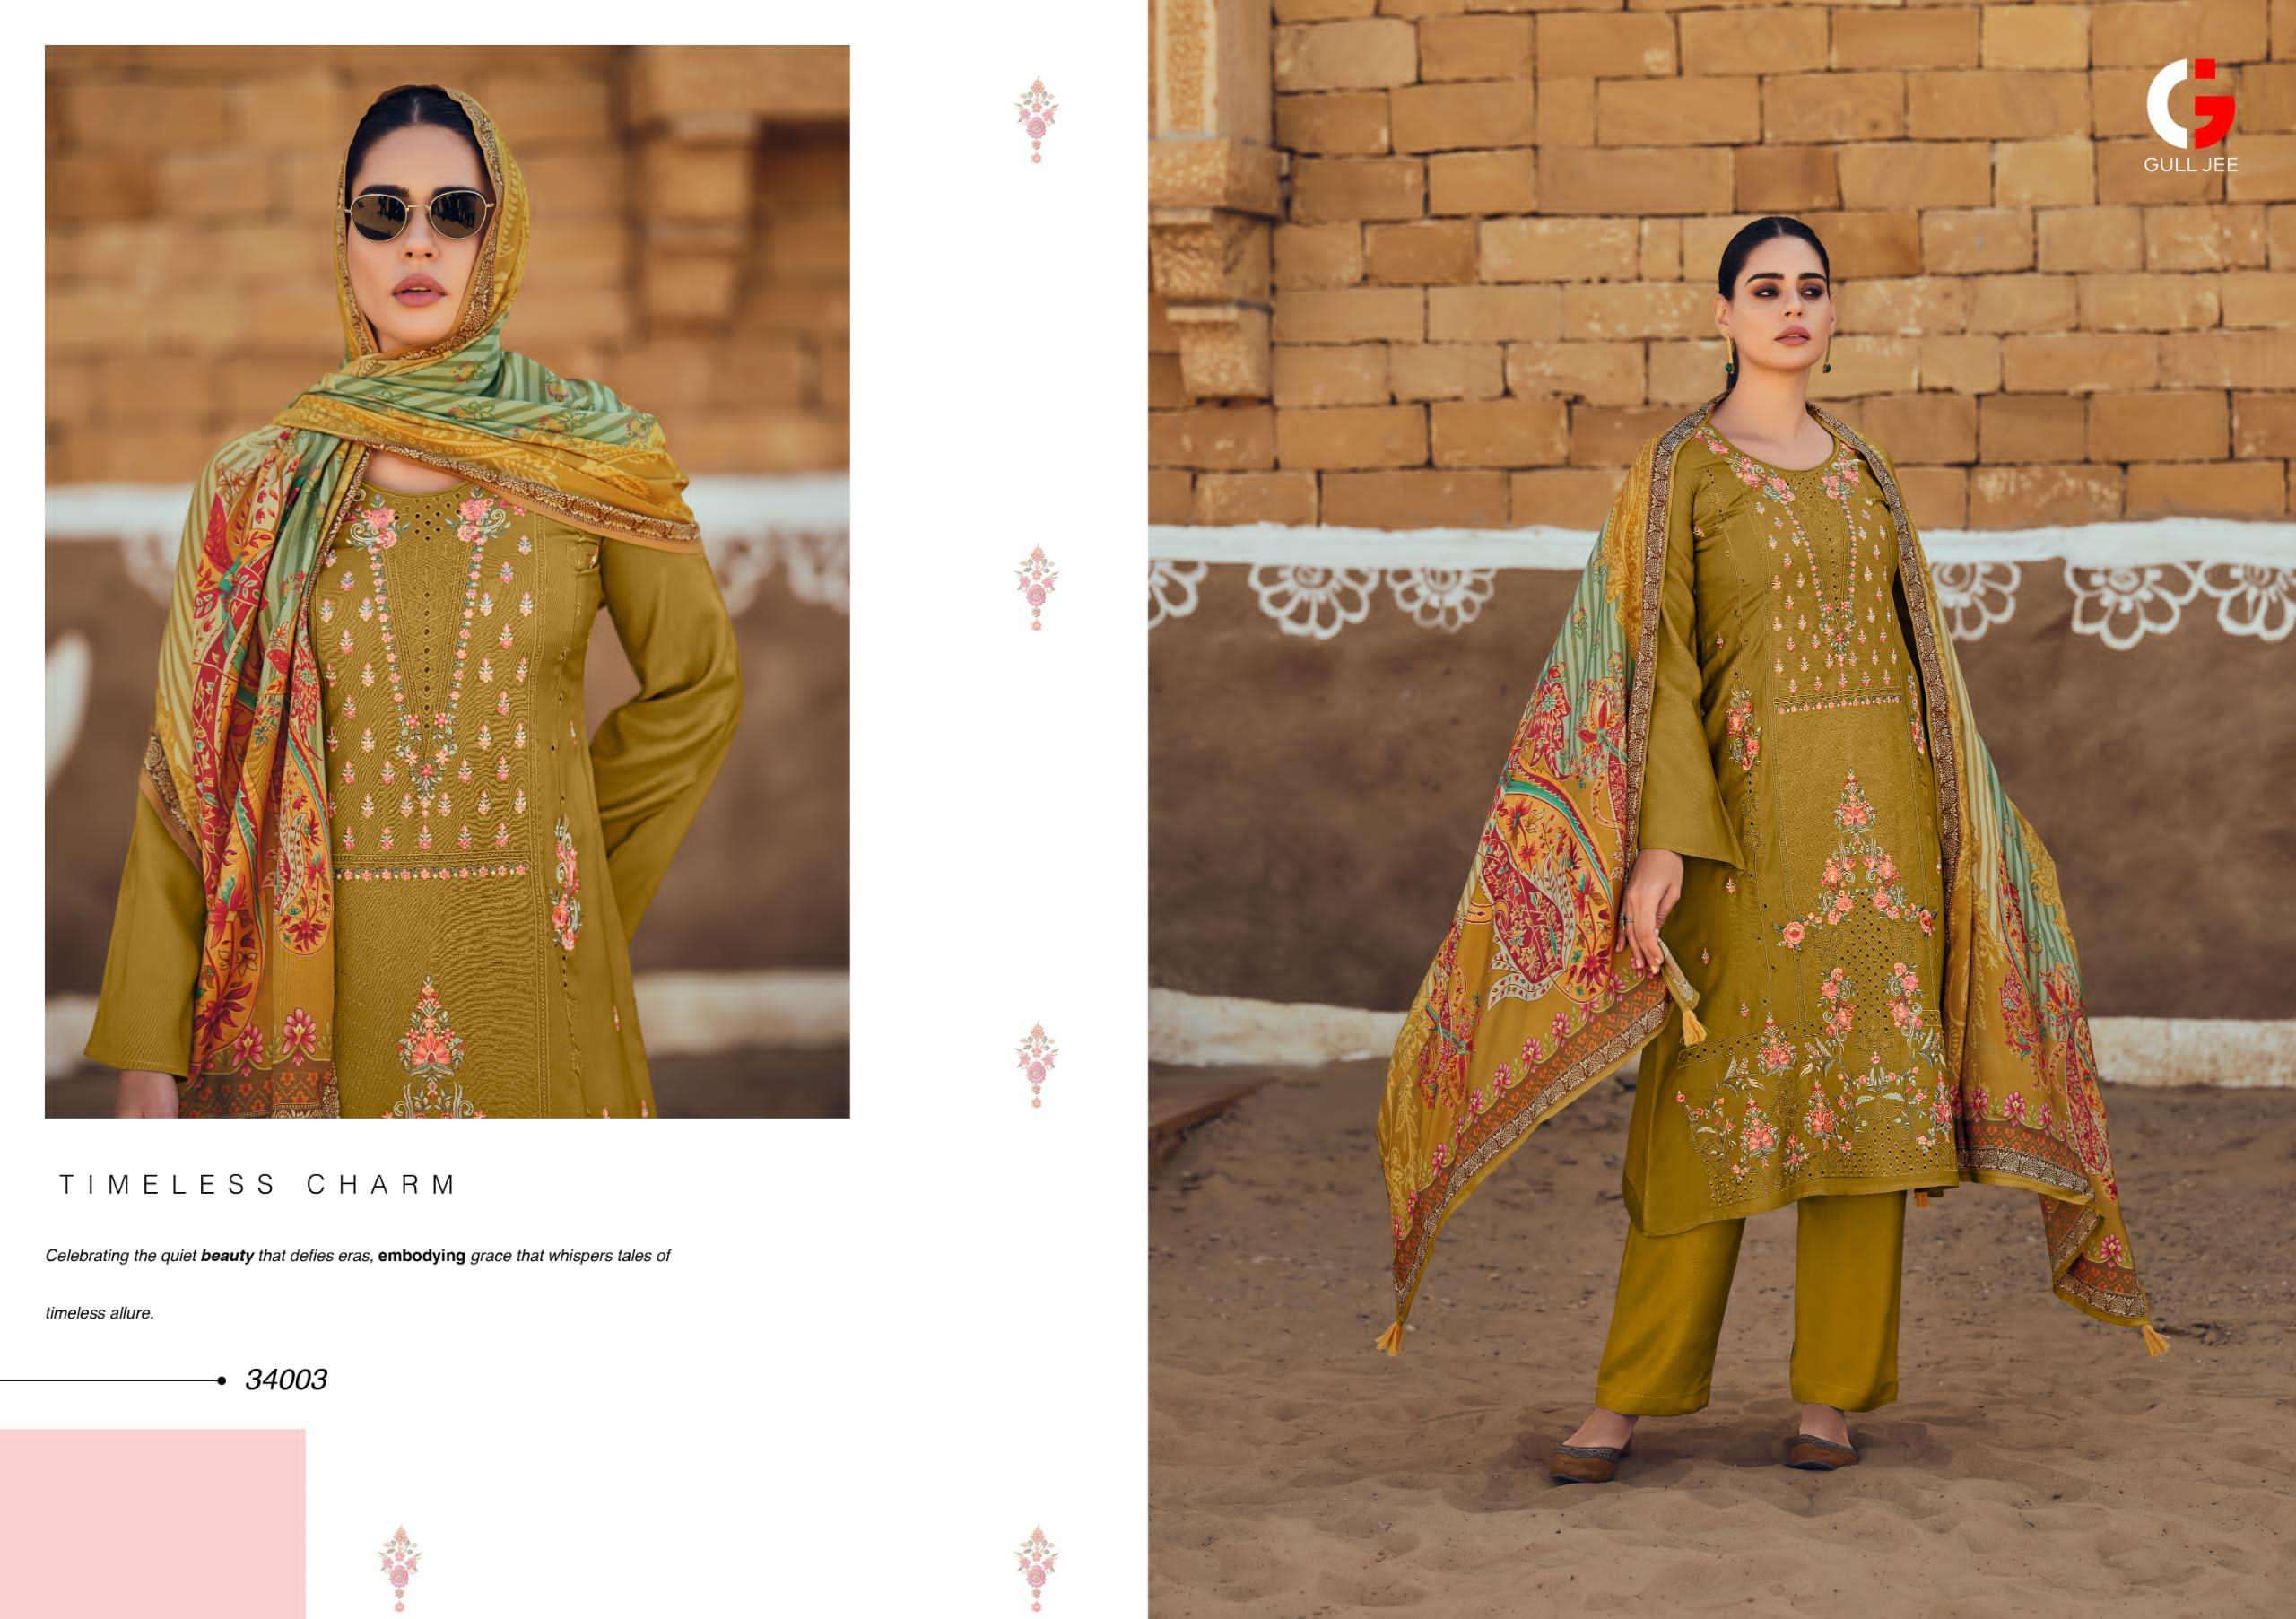 Gull Jee Ekans Masleen Silk Embroidery Salwar Suits Wholesale catalog